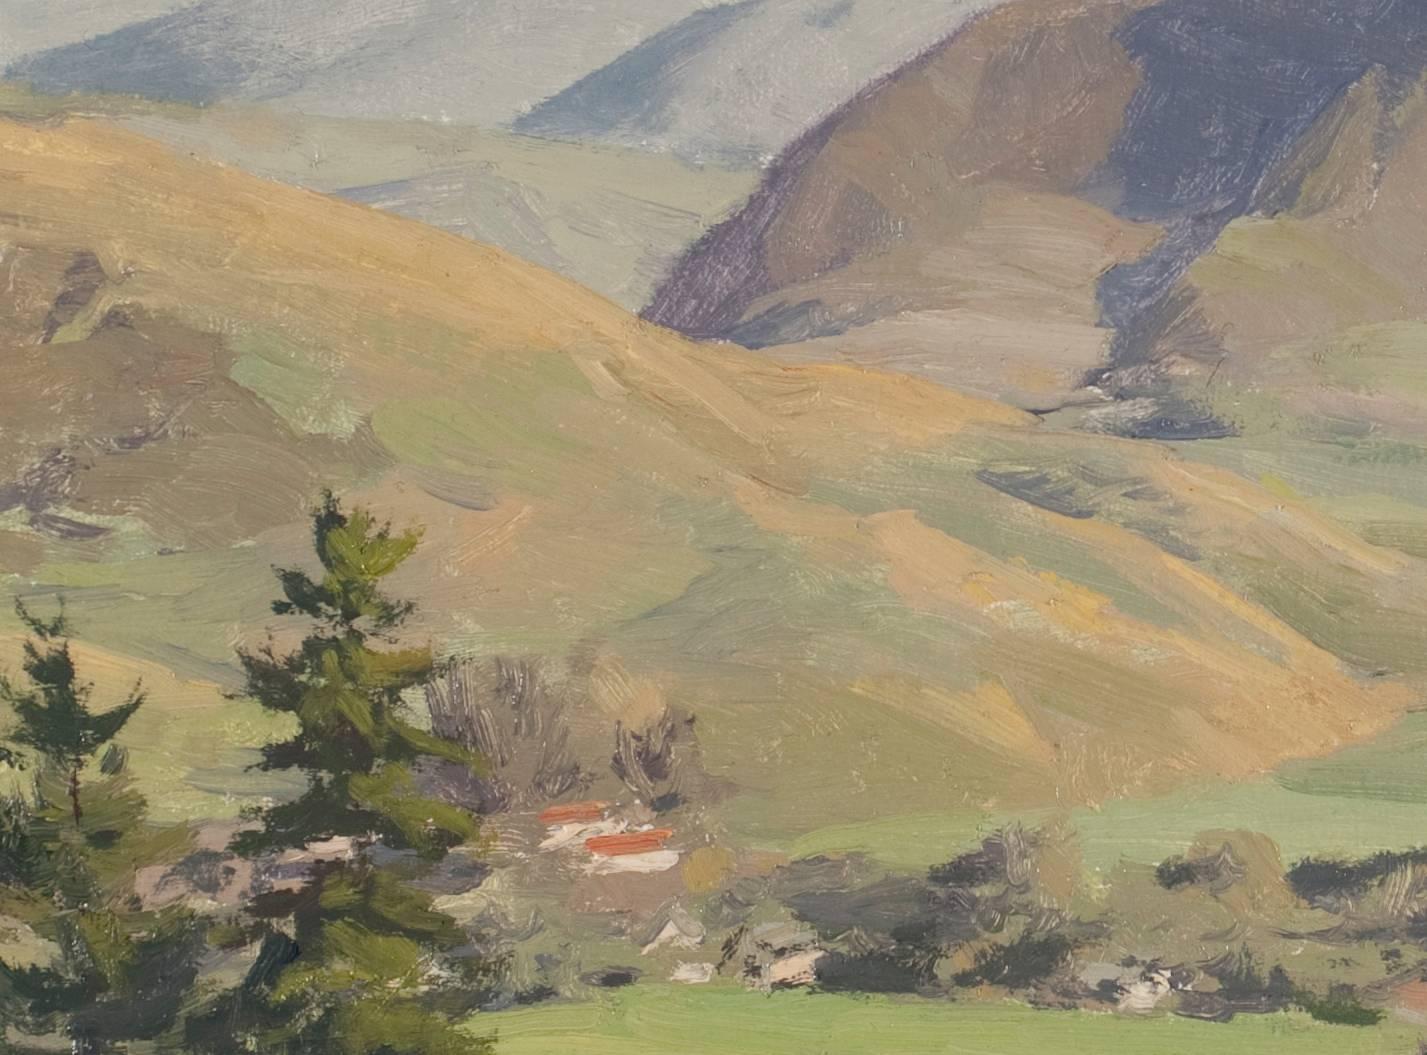 Pinecones for Joseph; Velvet Hills, Cambria - American Realist Painting by Joseph Paquet